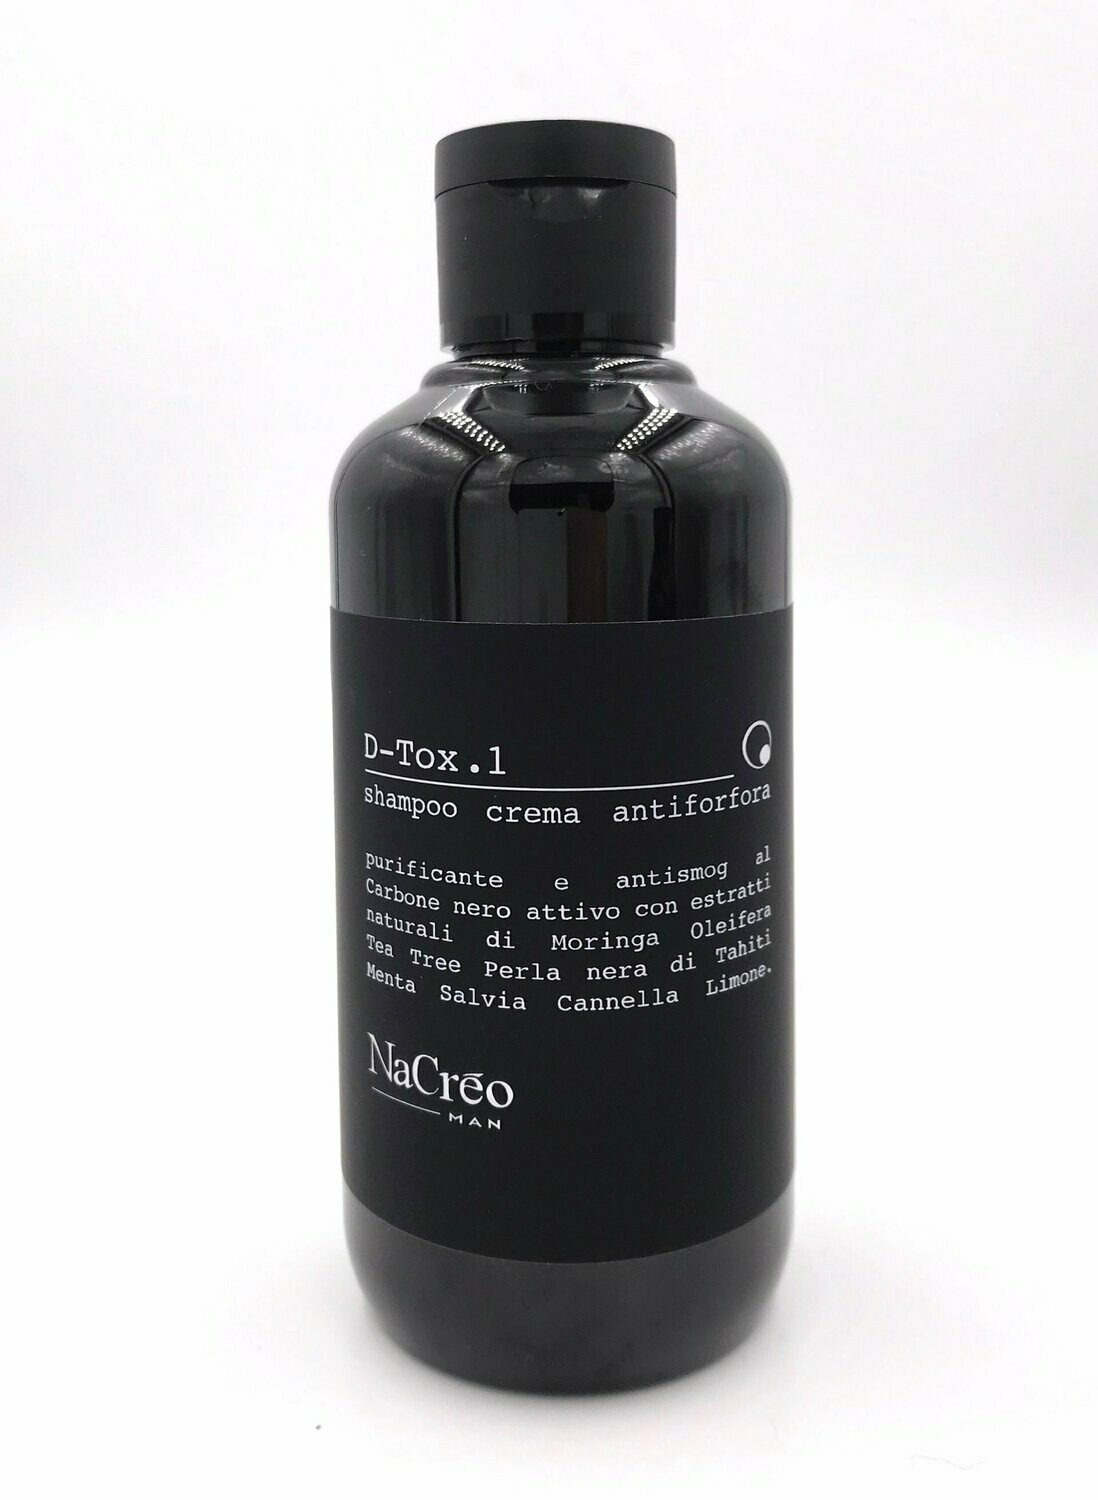 D-Tox shampoo crema